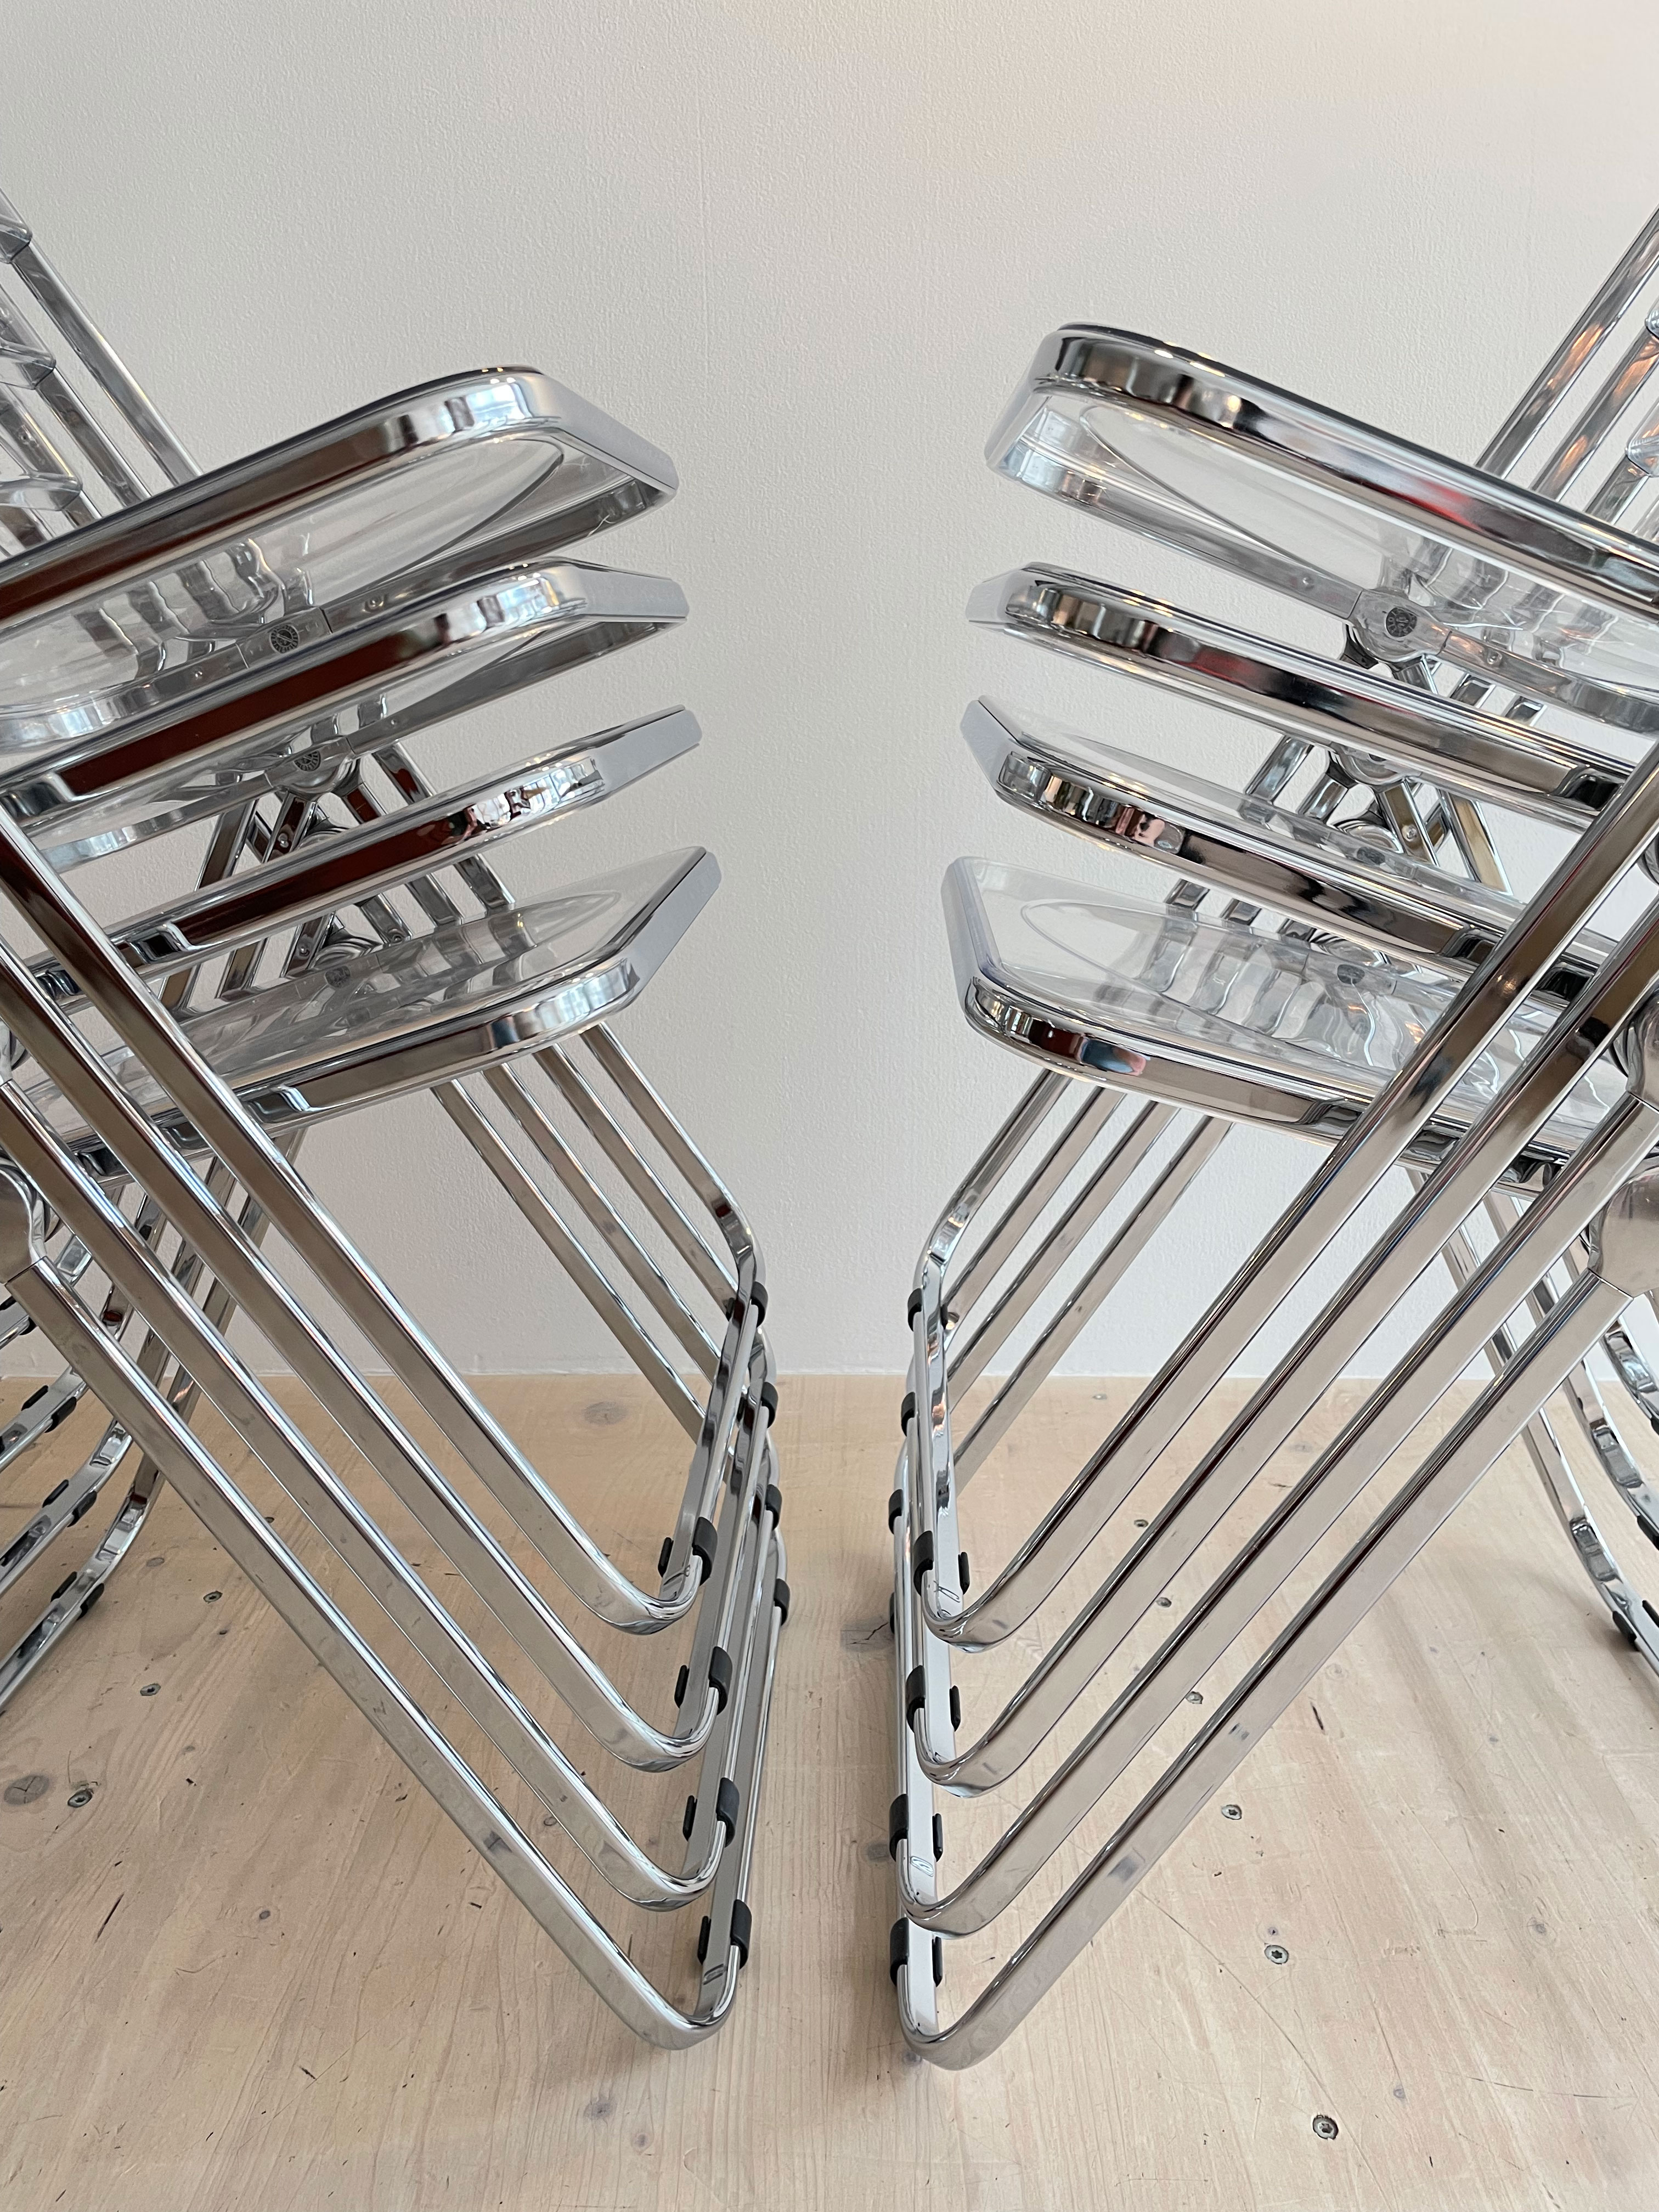 Transparent Plia Folding Chairs by Giancarlo Piretti. Available at heyday möbel, Grubenstrasse 19, 8045 Zürich, Switzerland. Mid-Century Modern Furniture and Other Stuff.